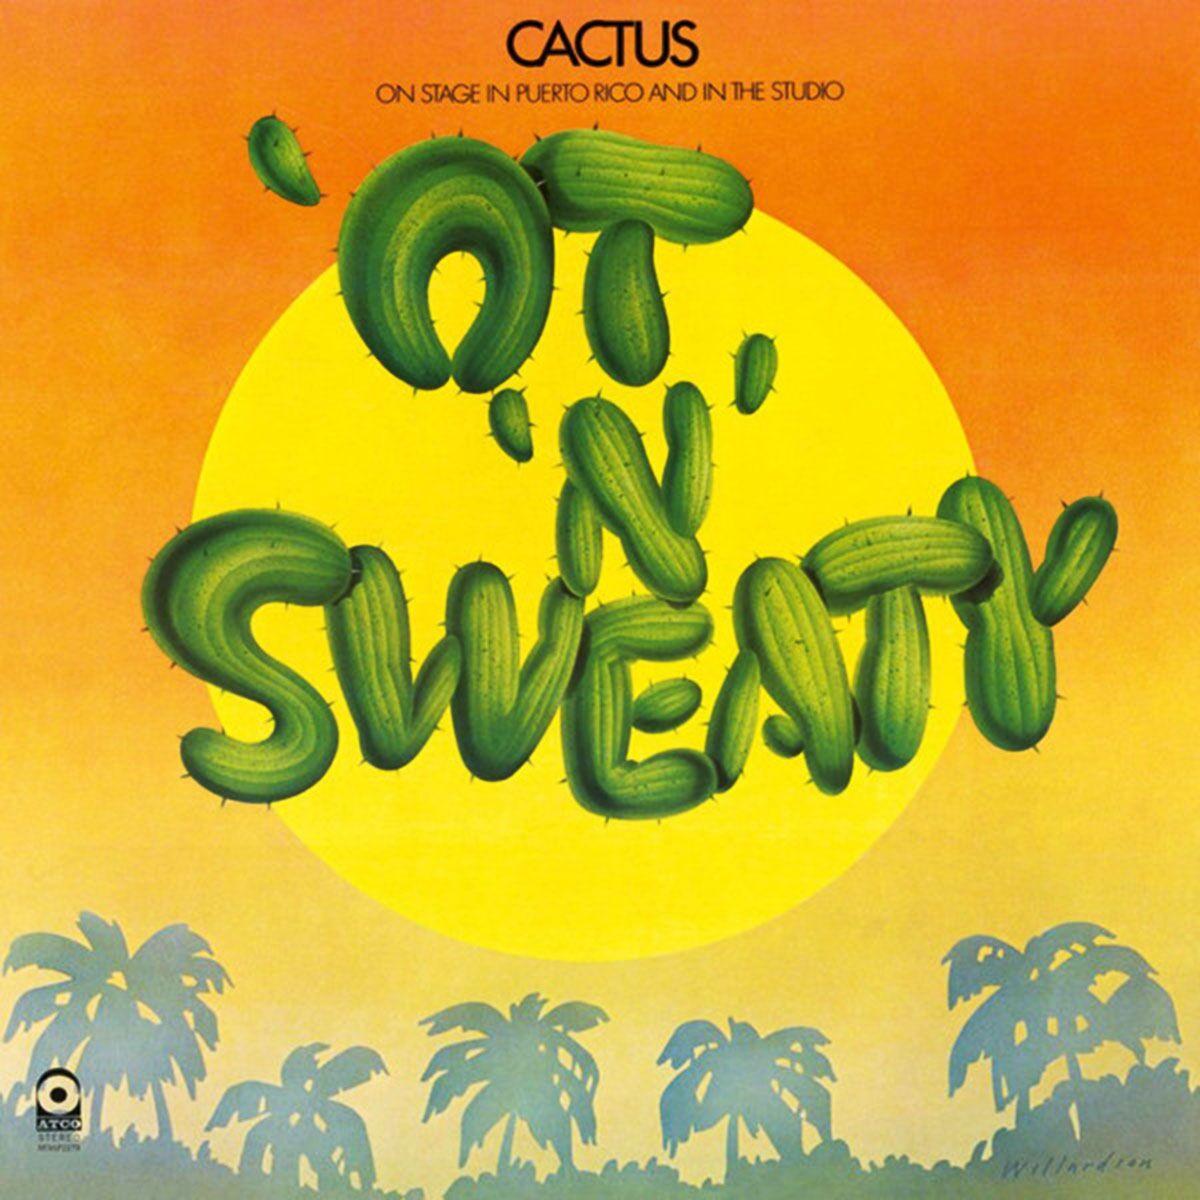 Cactus ’Ot ‘N’ Sweaty (LP